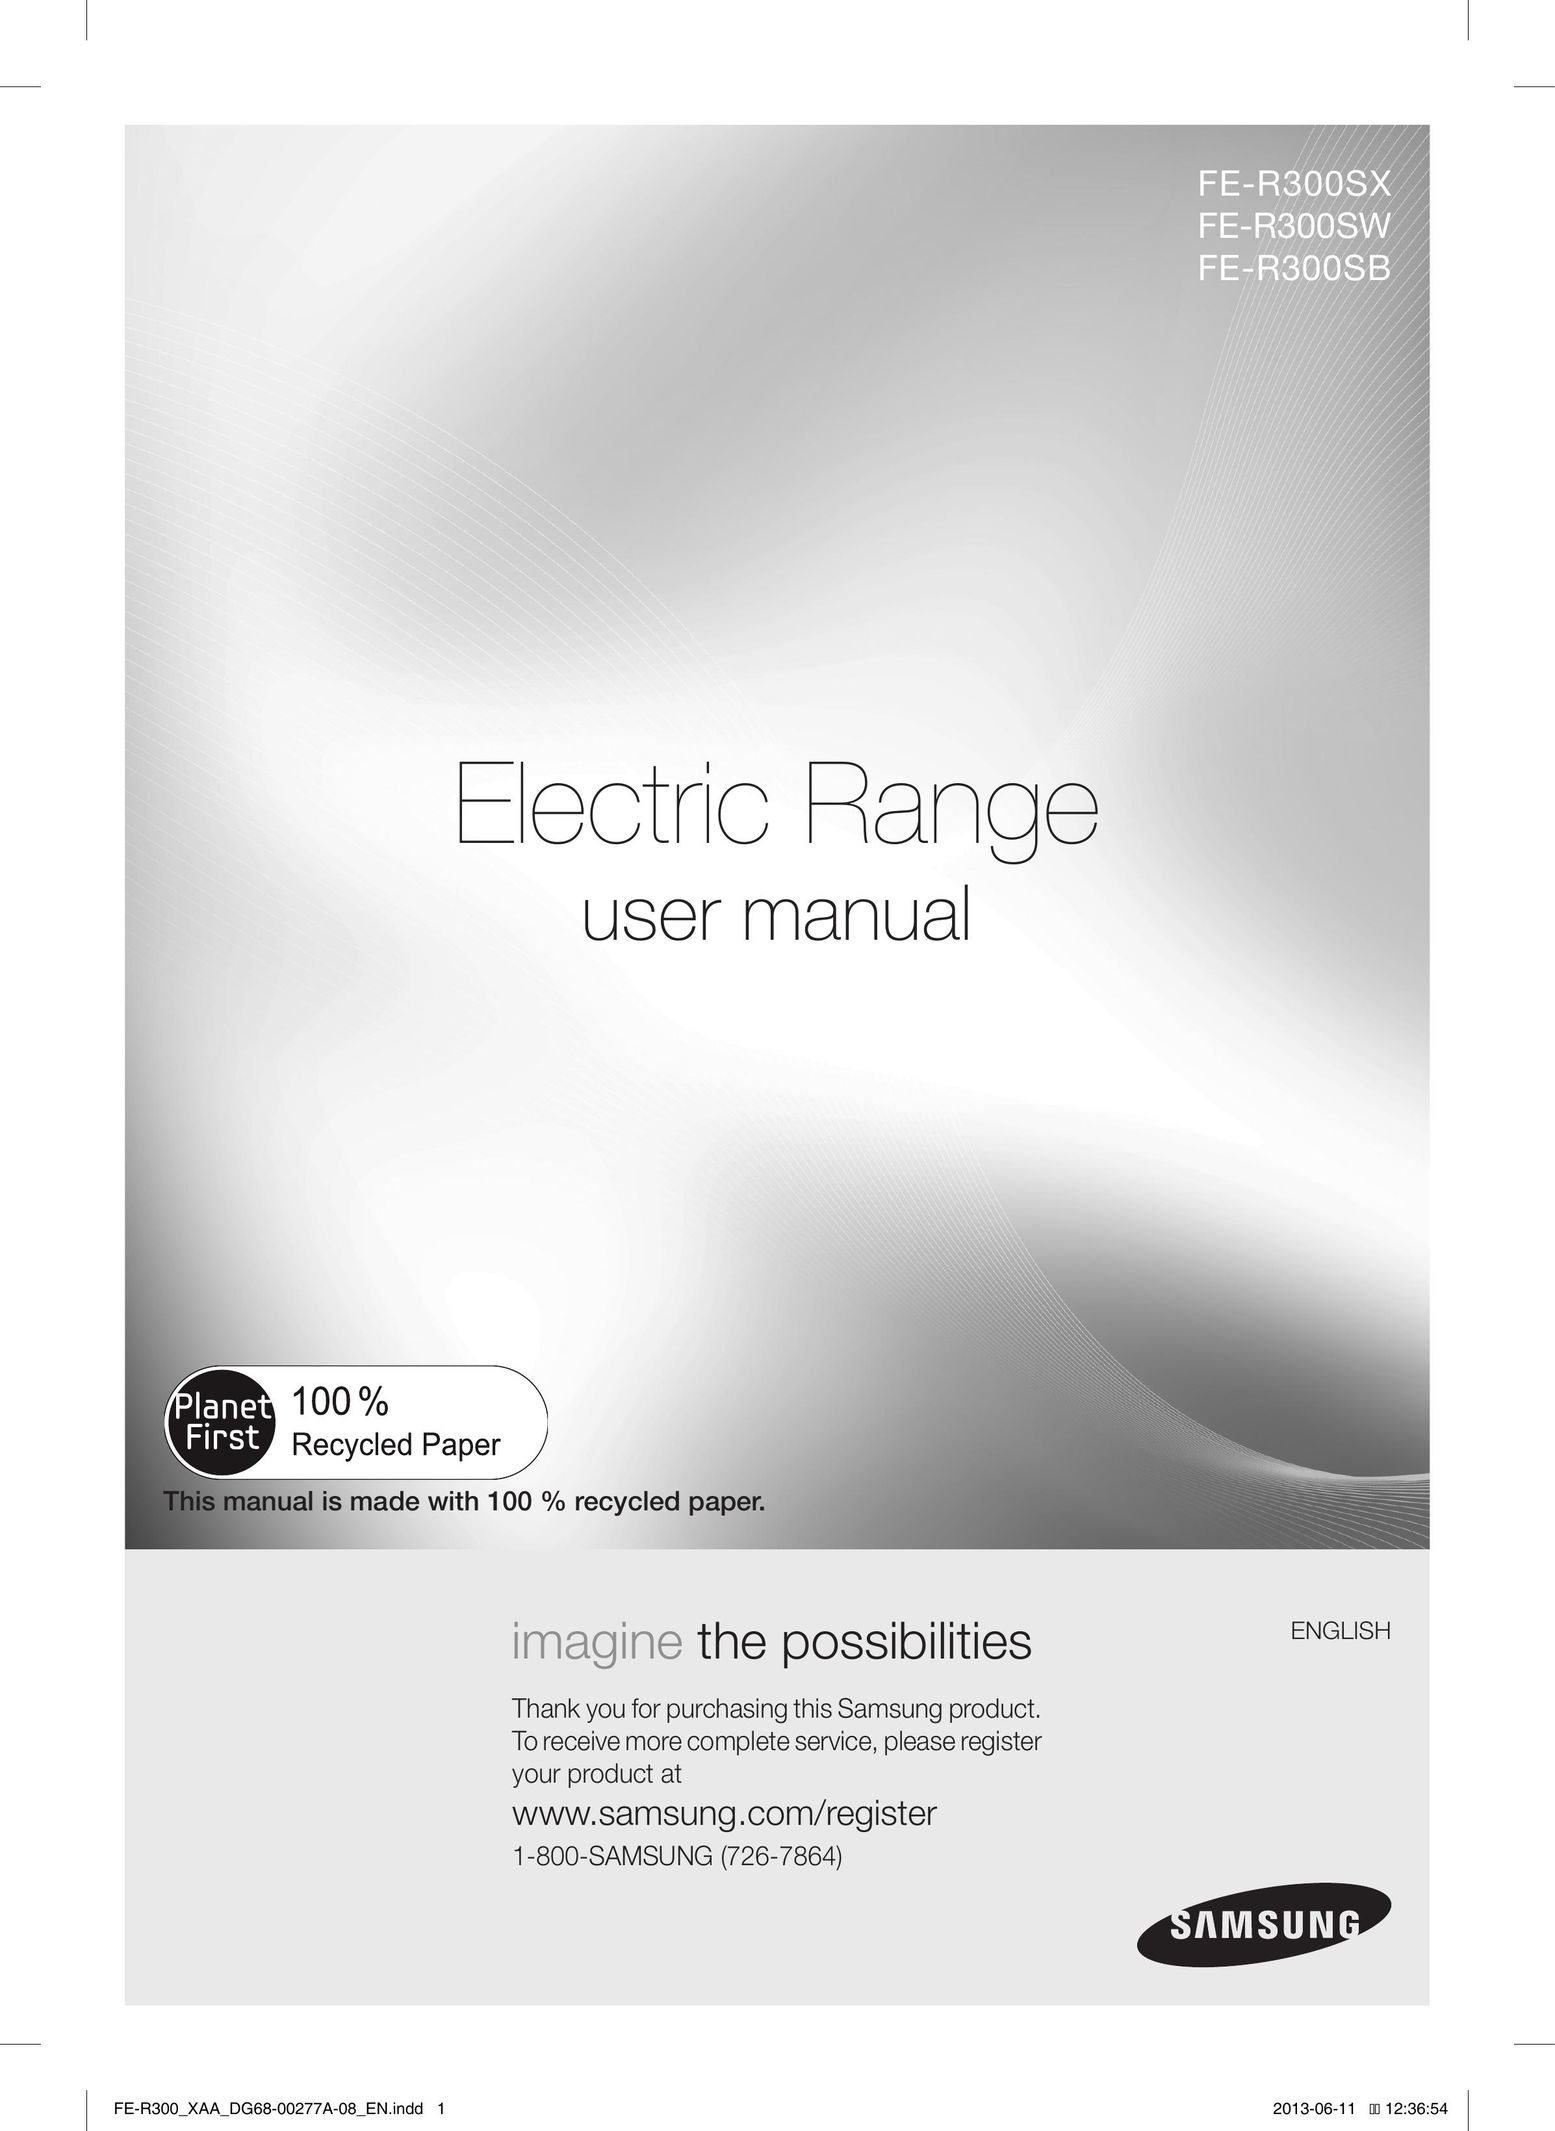 Samsung FER300SBPKG Range User Manual